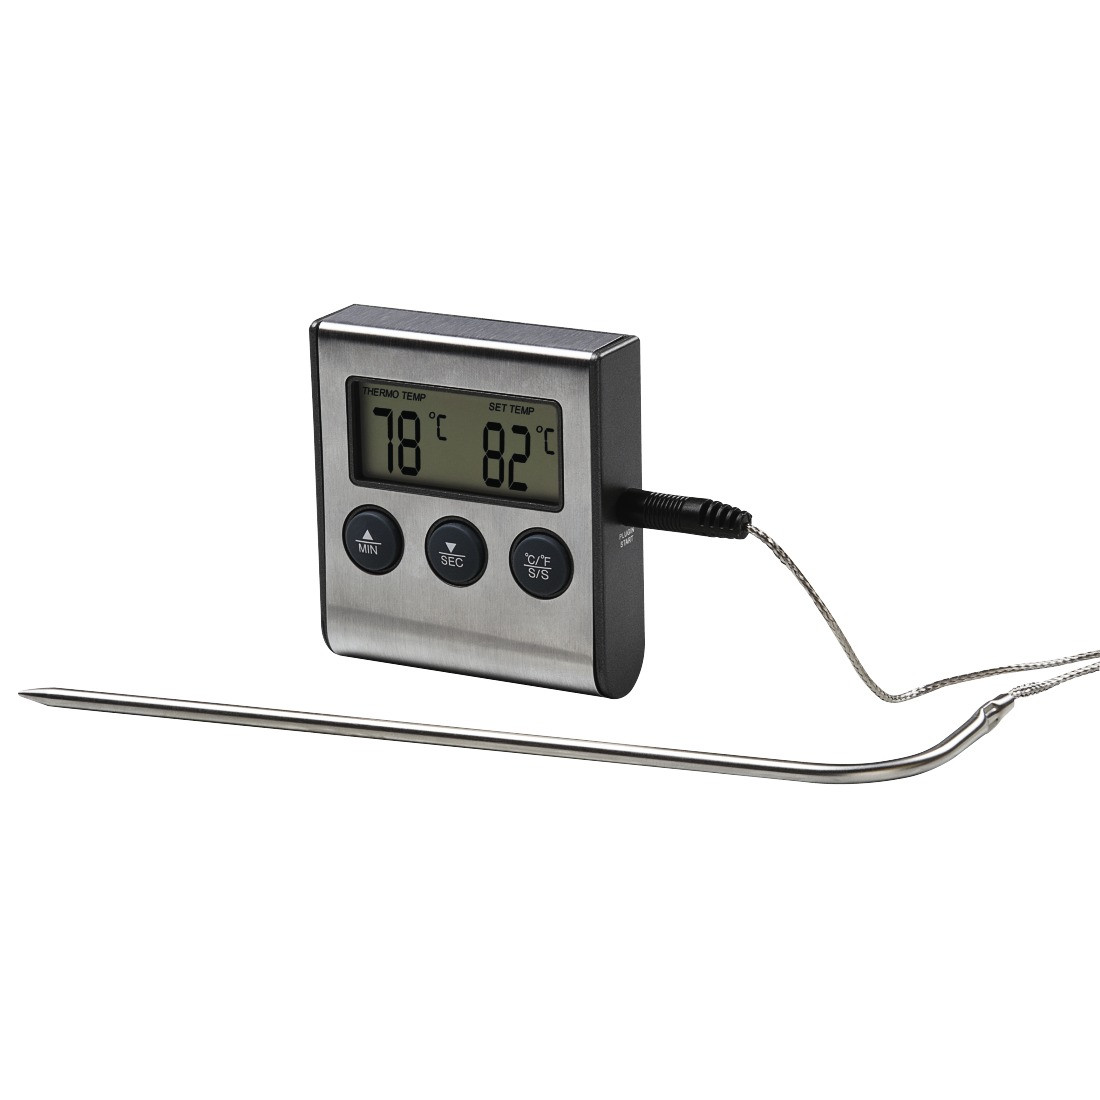 Xavax Digitale vleesthermometer met timer Kookaccessoires